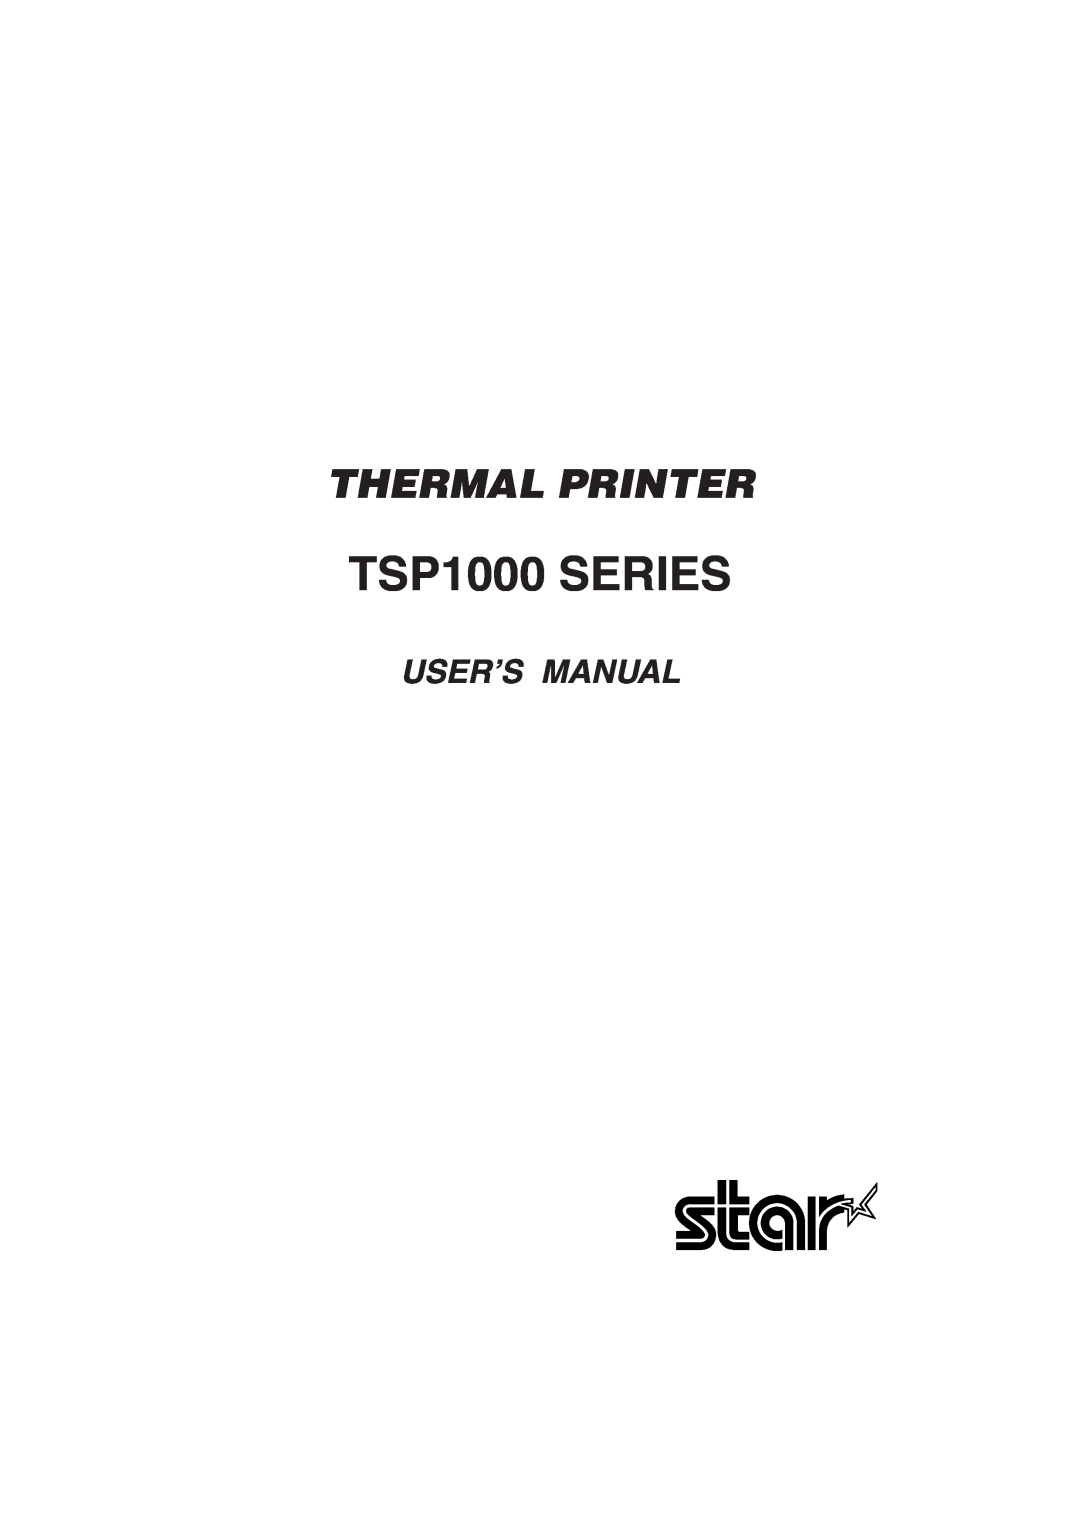 Star Micronics user manual TSP1000 SERIES, Thermal Printer, User’S Manual 